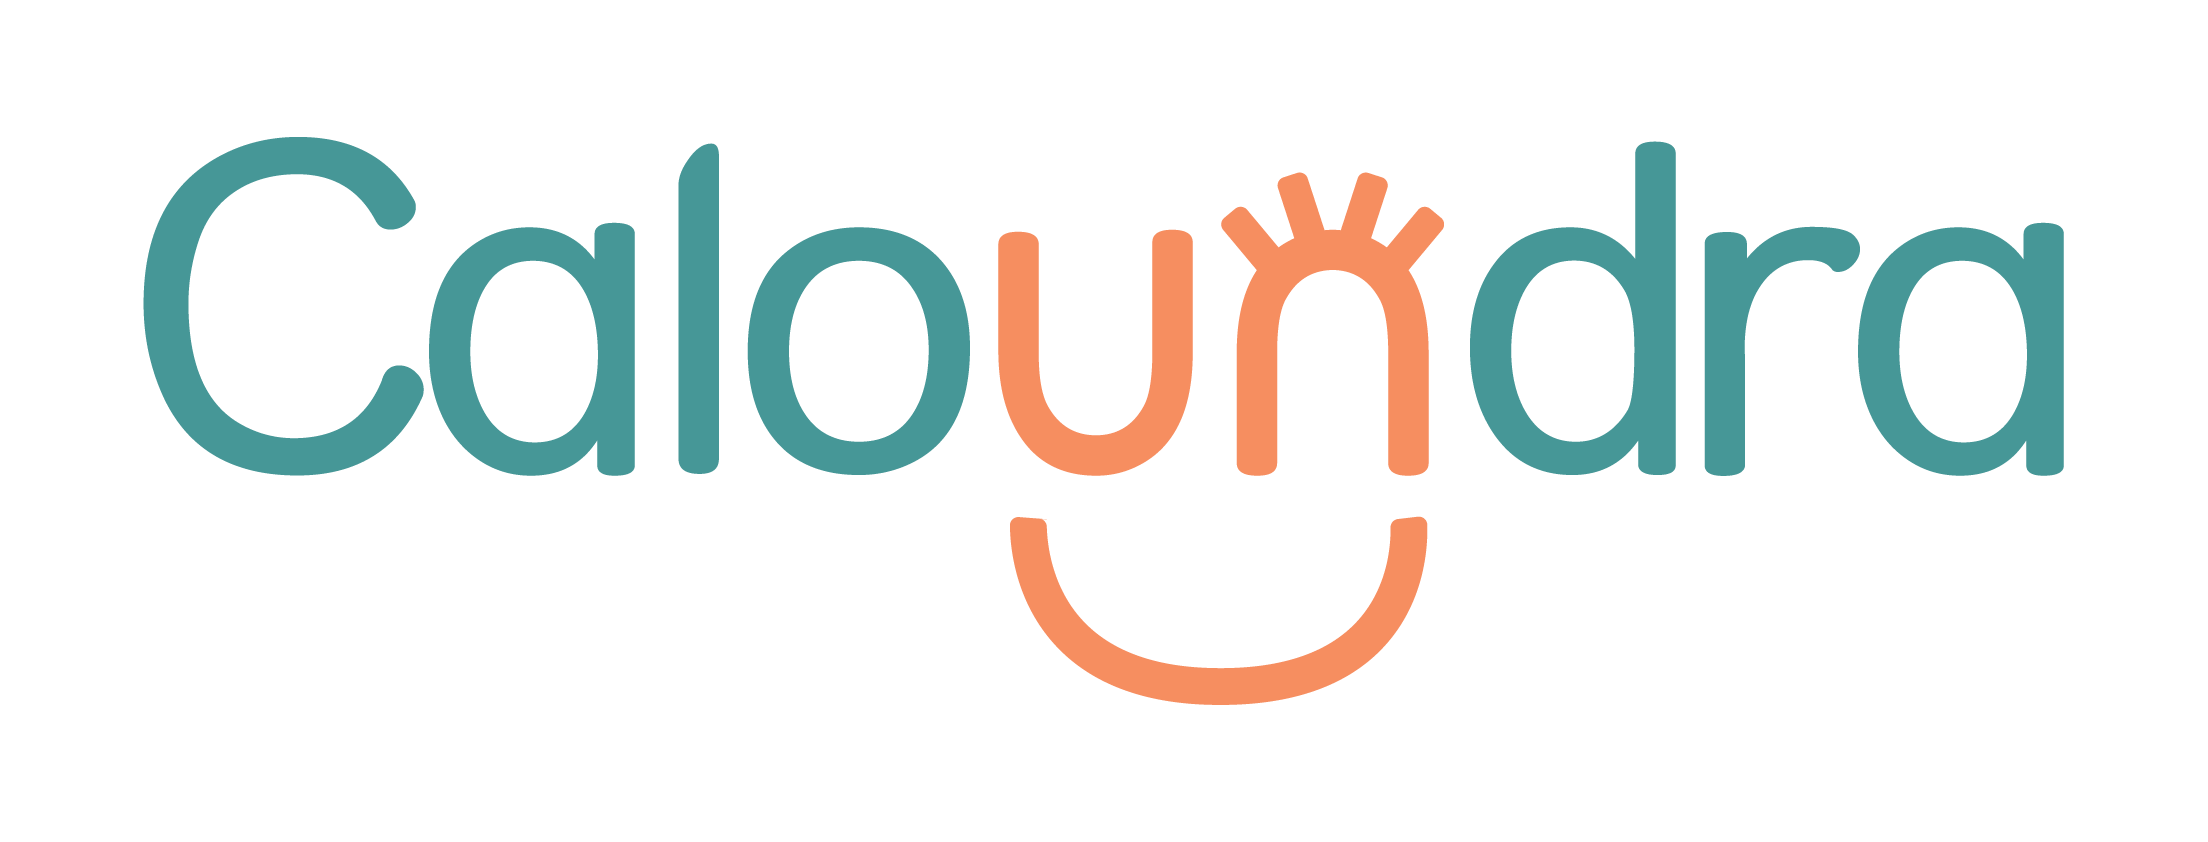 Caloundra logo